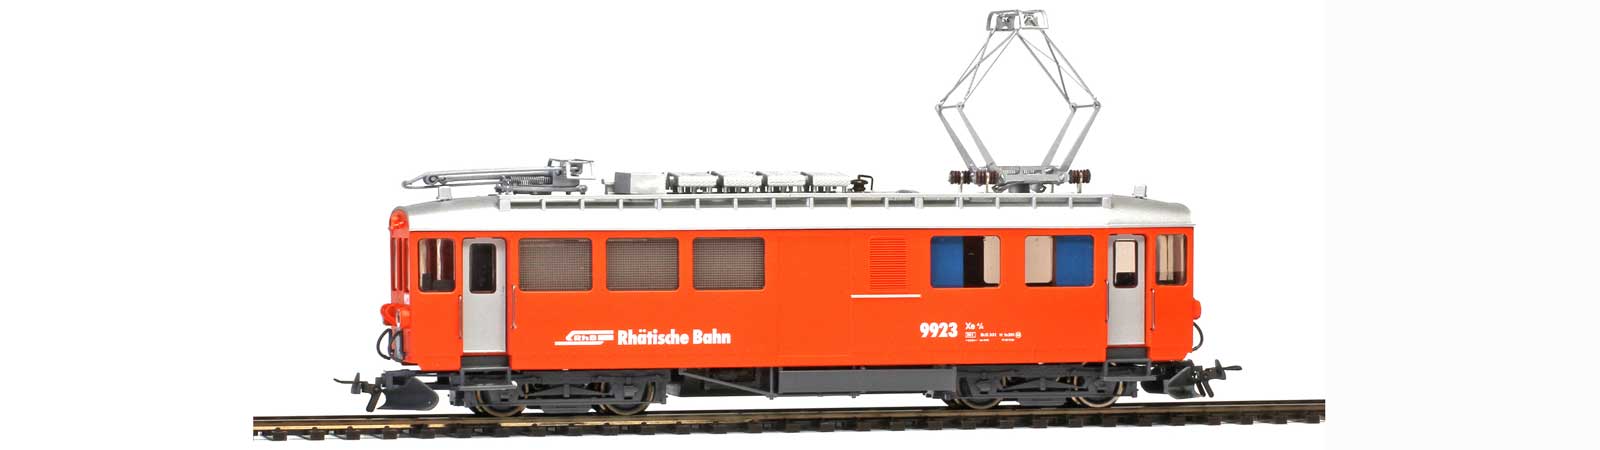 Bemo 1268 193 RhB Xe 4/4 9923 Bernina rail service car